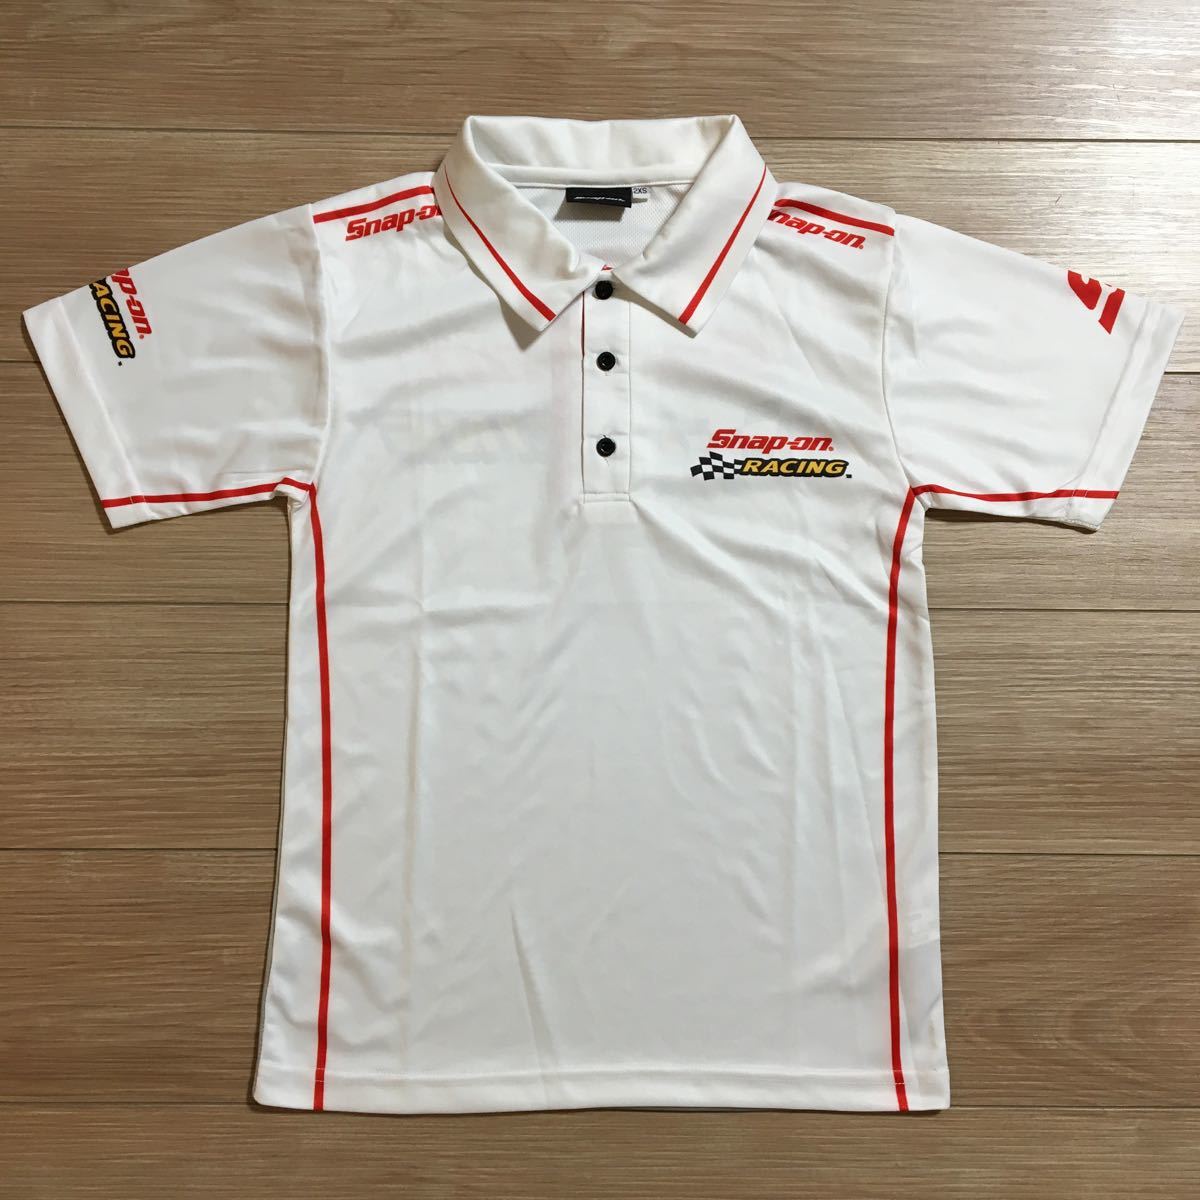 Snap-on Racing Polo shirt スナップオン レーシング ポロシャツ レディース 2XSサイズ グッズ コレクション ユーズド